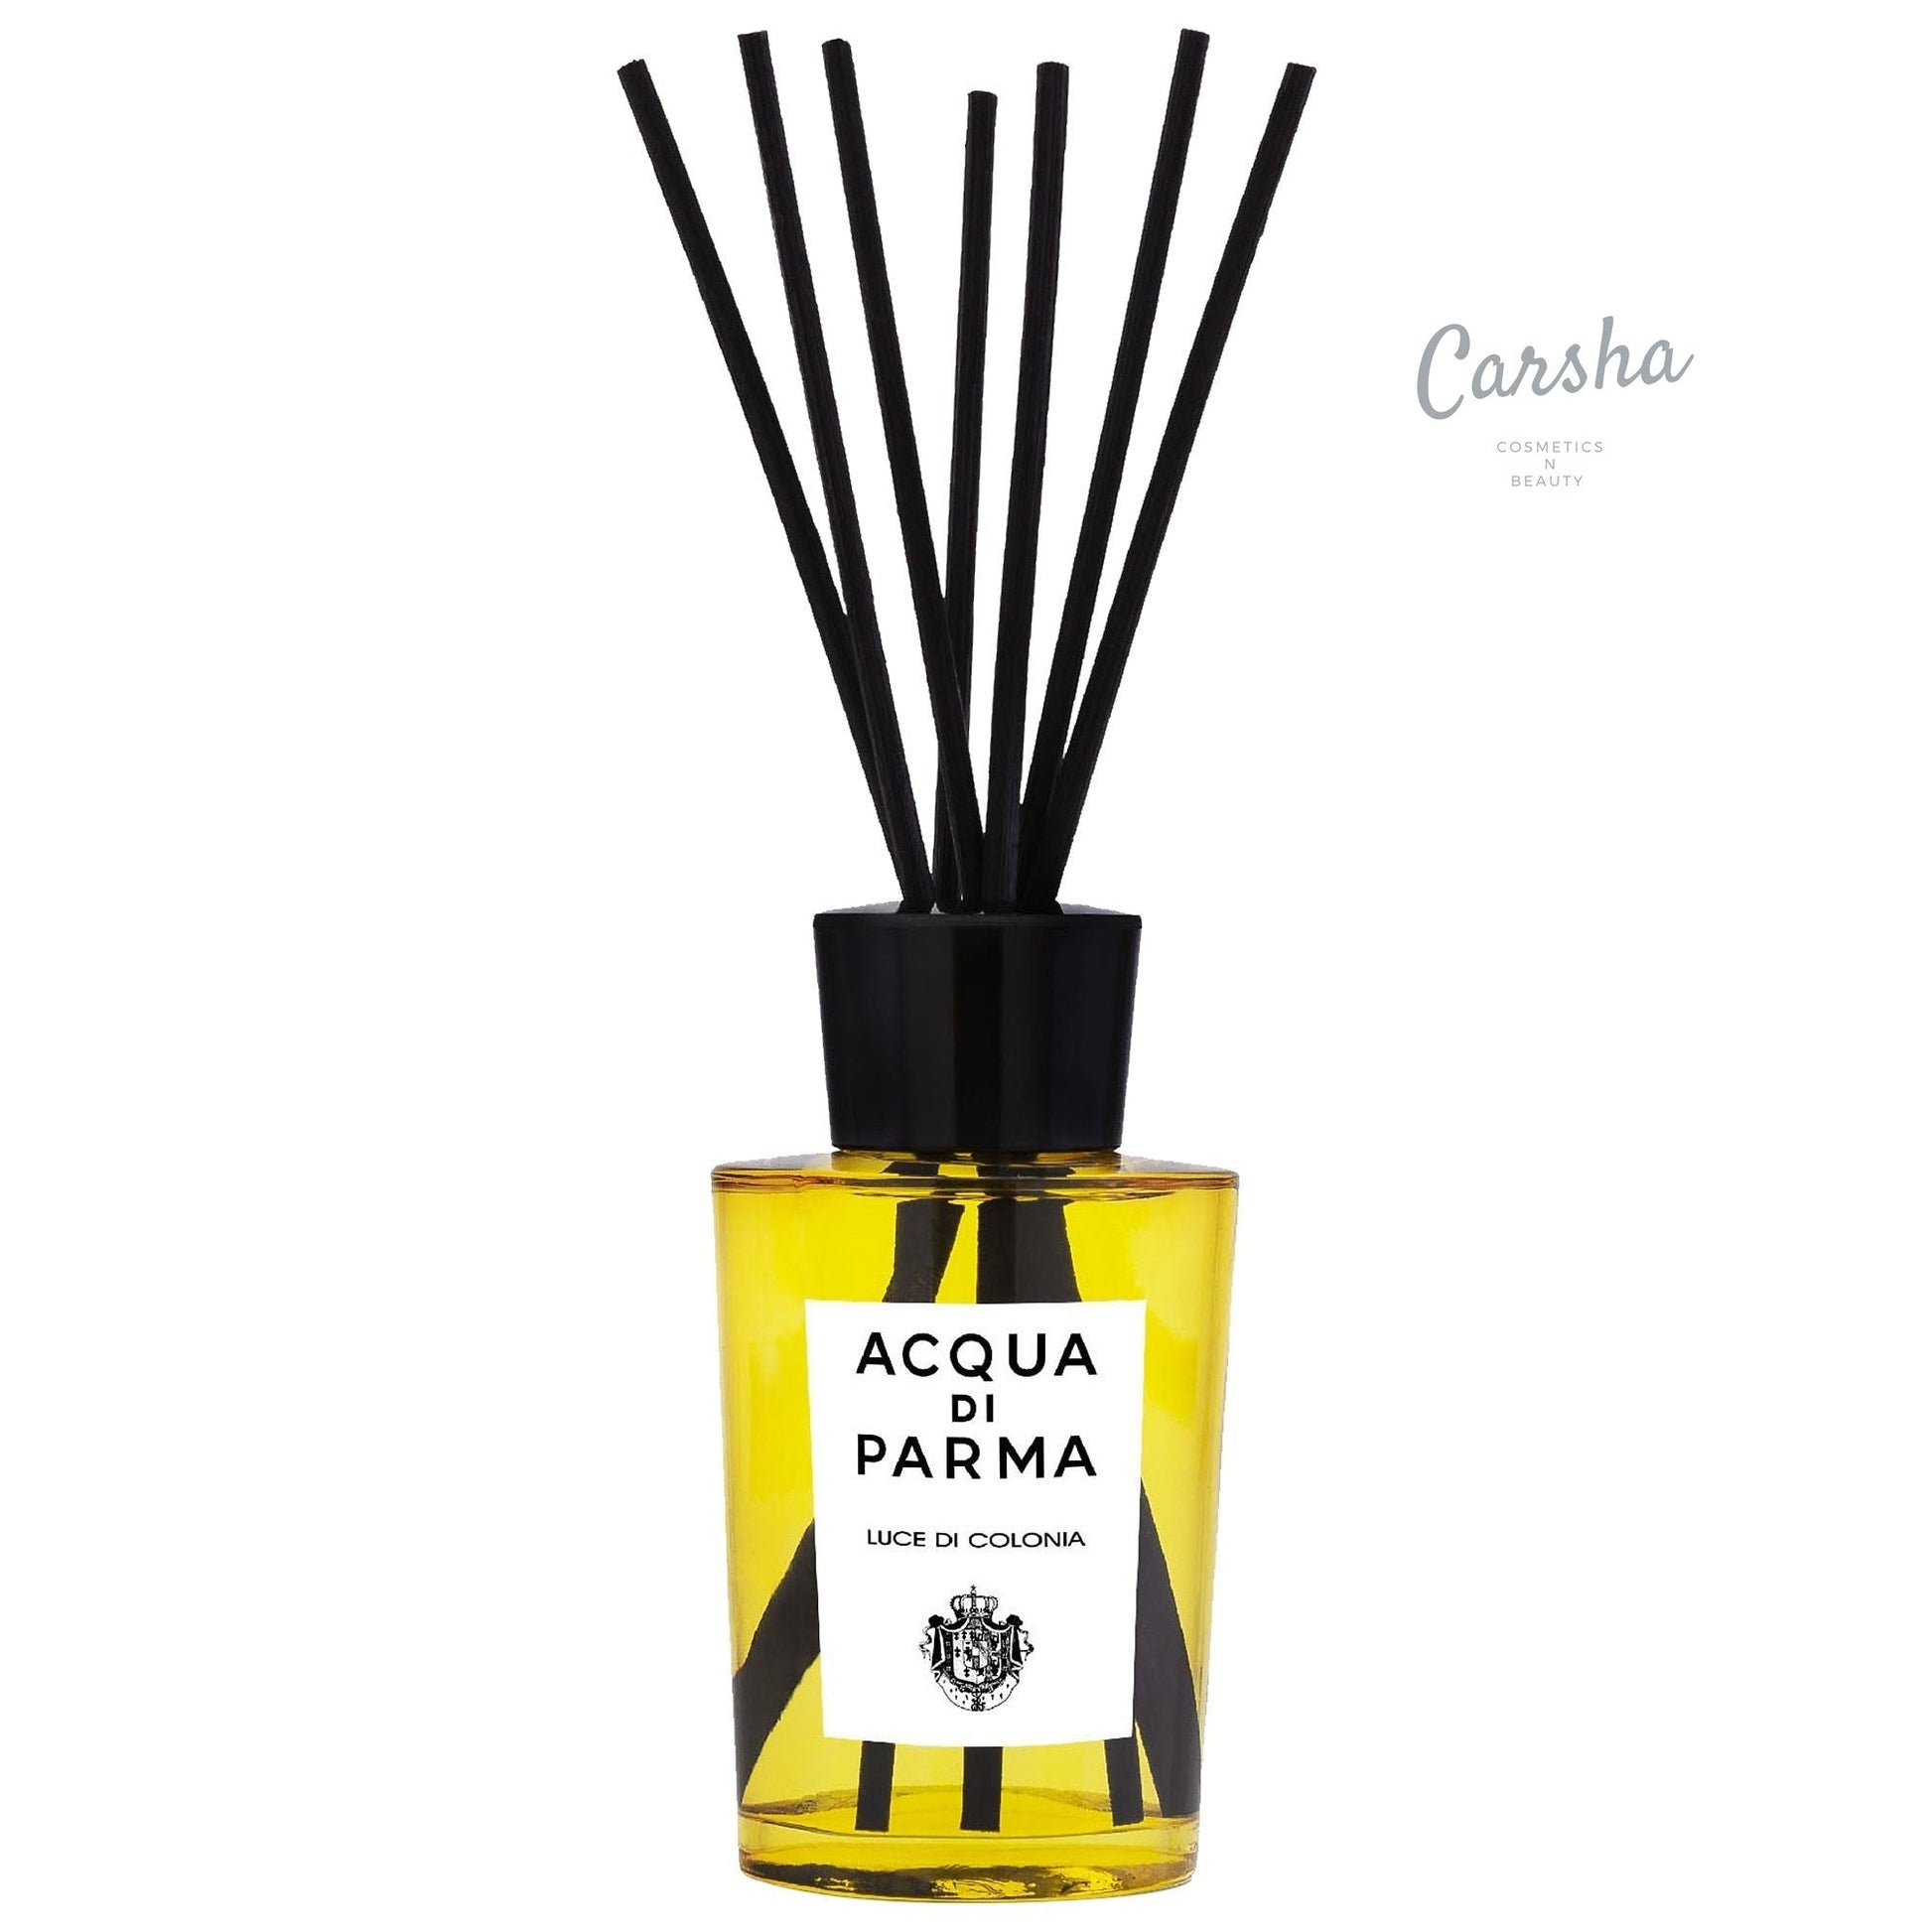 Acqua di Parma Beauty & Fragrance Offers